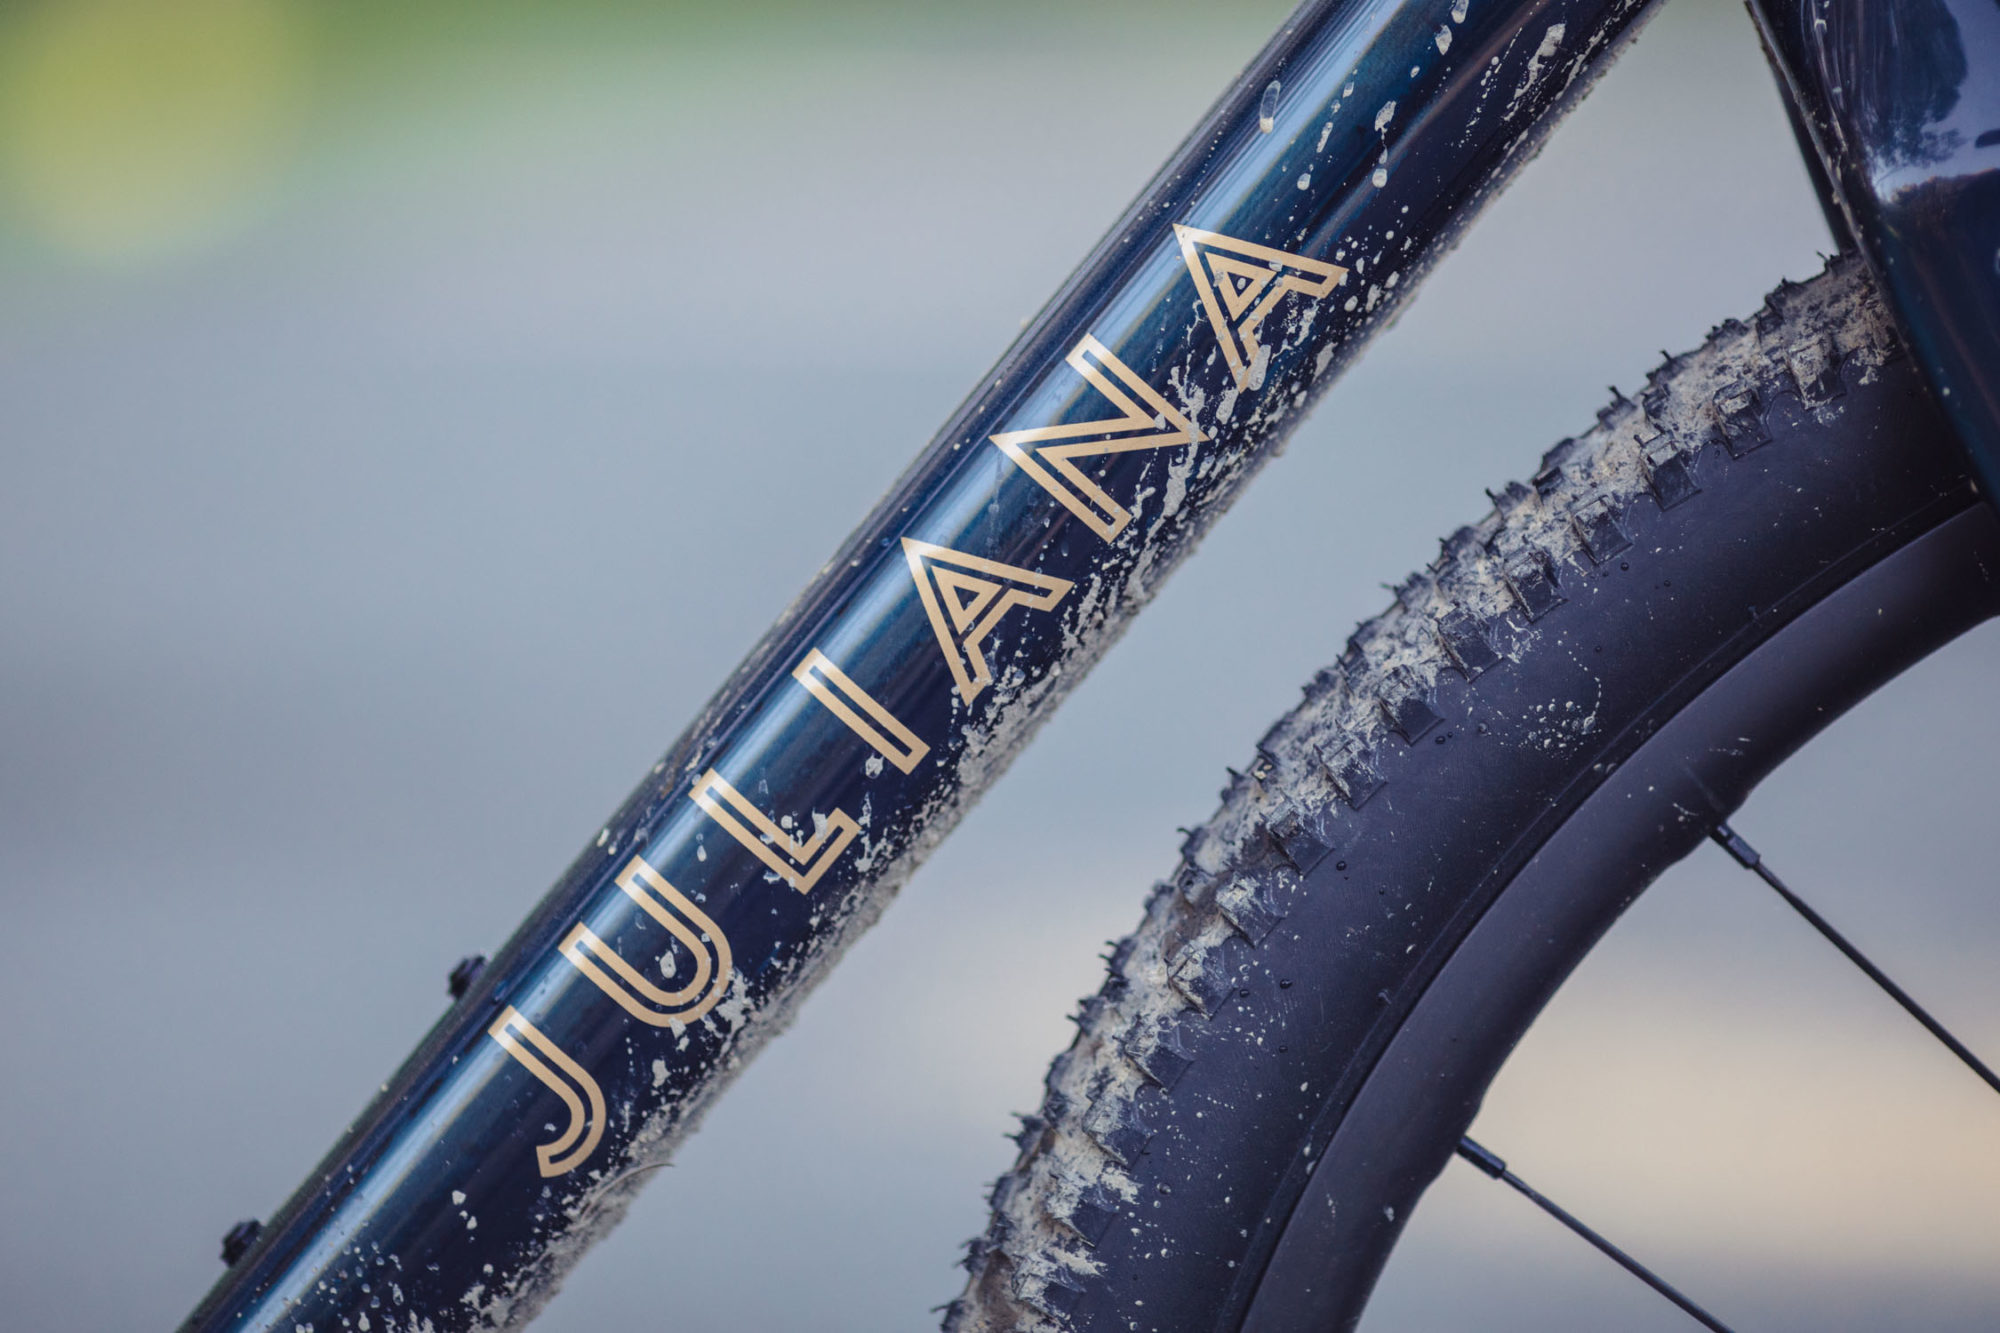 Juliana Quincy 650b gravel bike